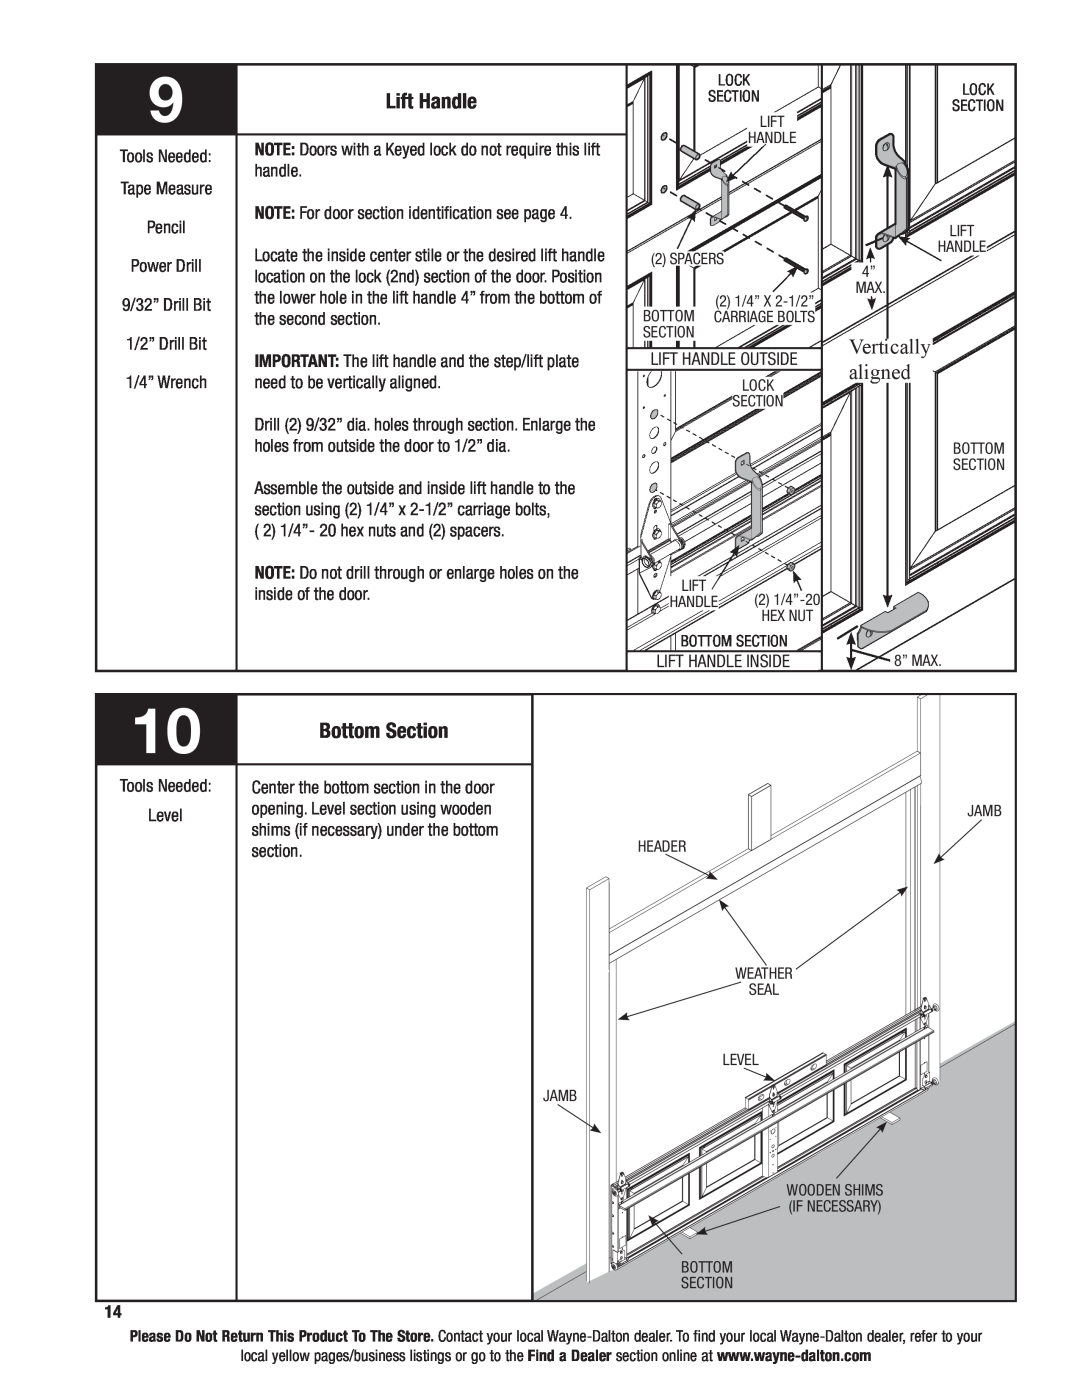 Wayne-Dalton 46 installation instructions Lift Handle, Bottom Section, Vertically aligned 